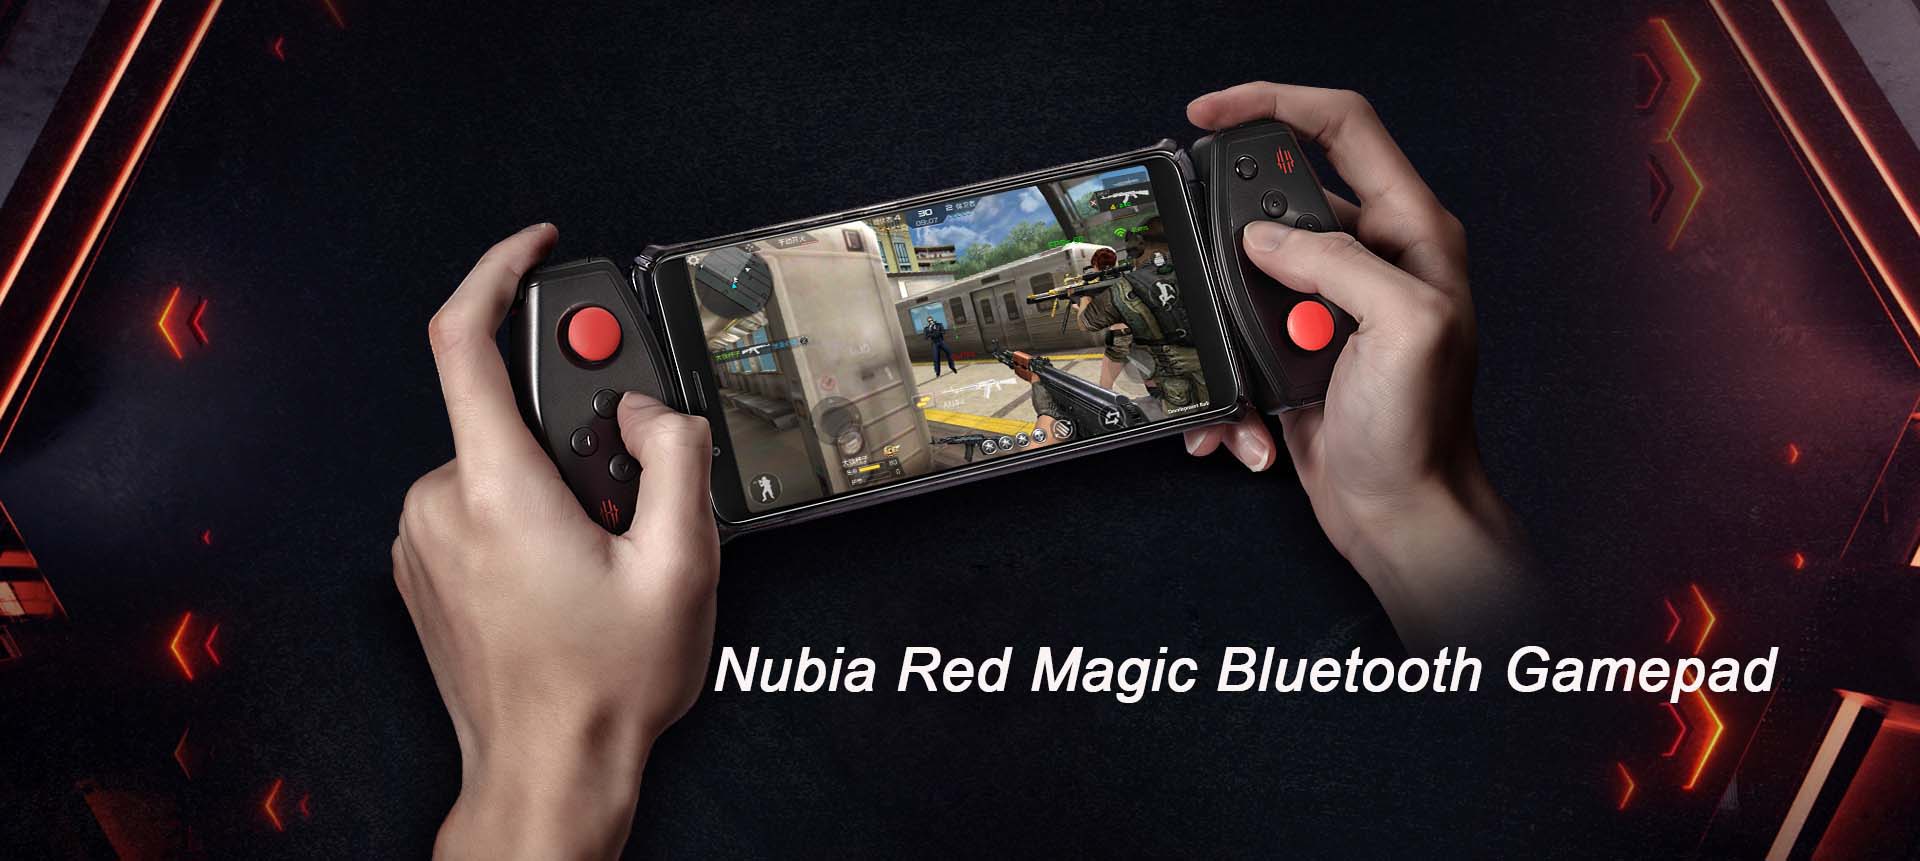 Nubia Red Magic Bluetooth Gamepad